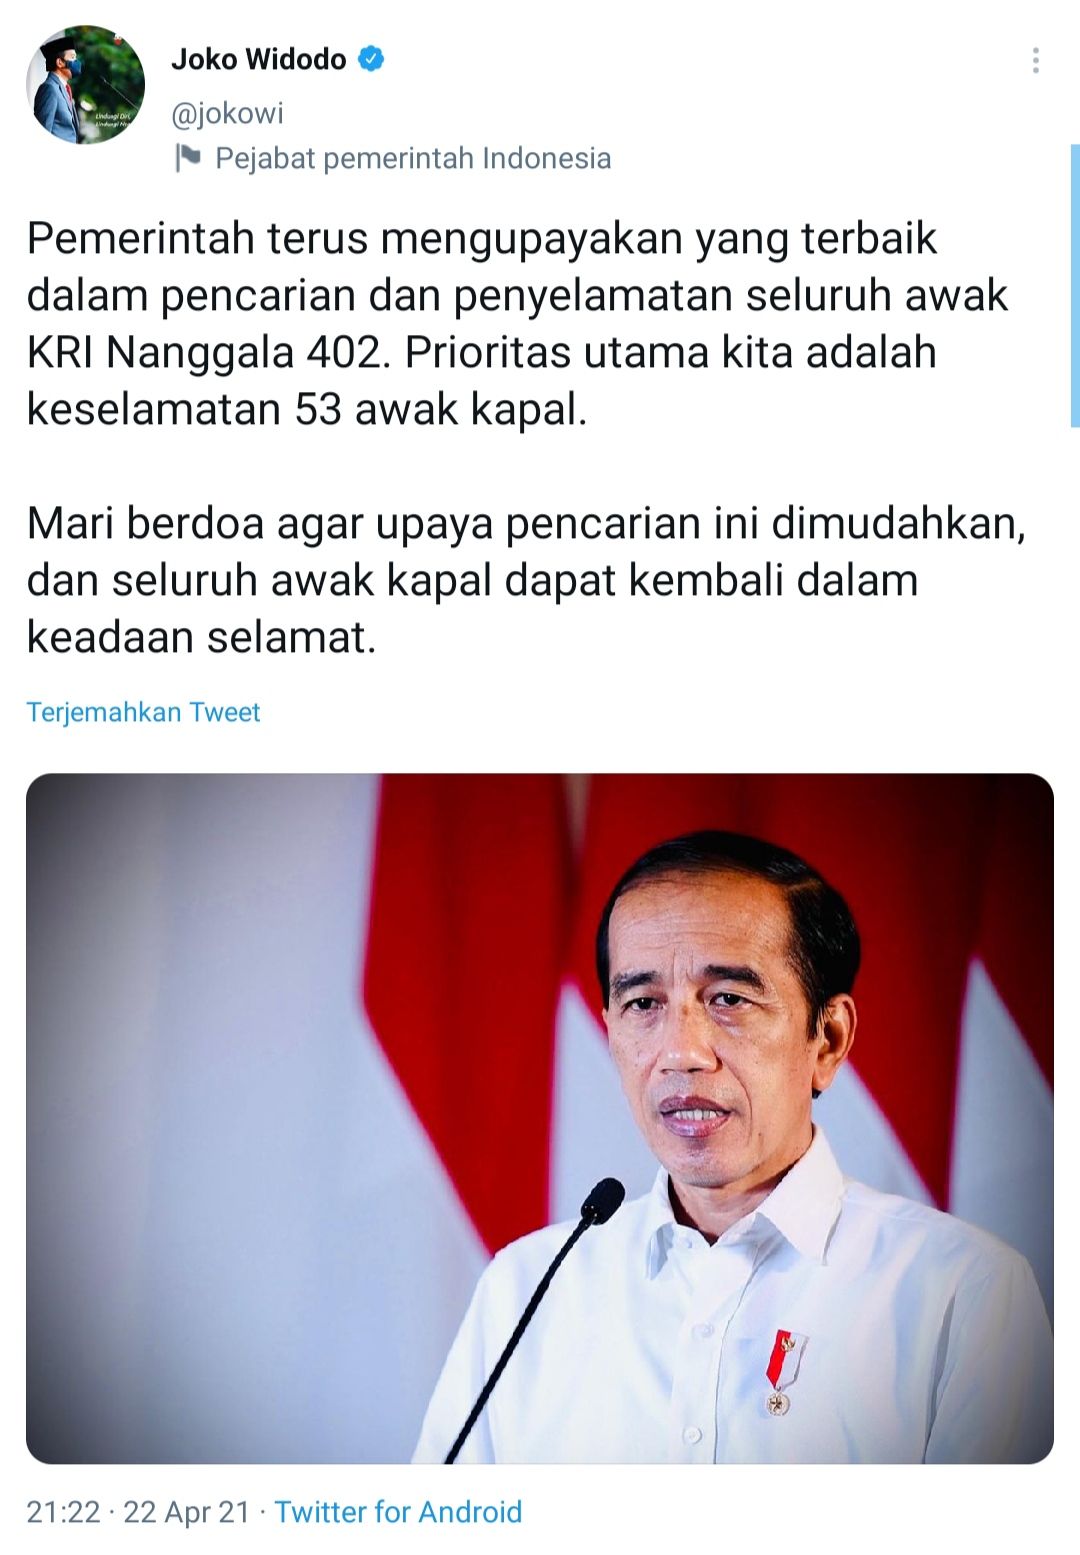 Presiden Joko Widodo mengajak seluruh masyarakat Indonesia untuk mendoakan proses pencarian dan keselamatan awak kapal selam KRI Nanggala 402